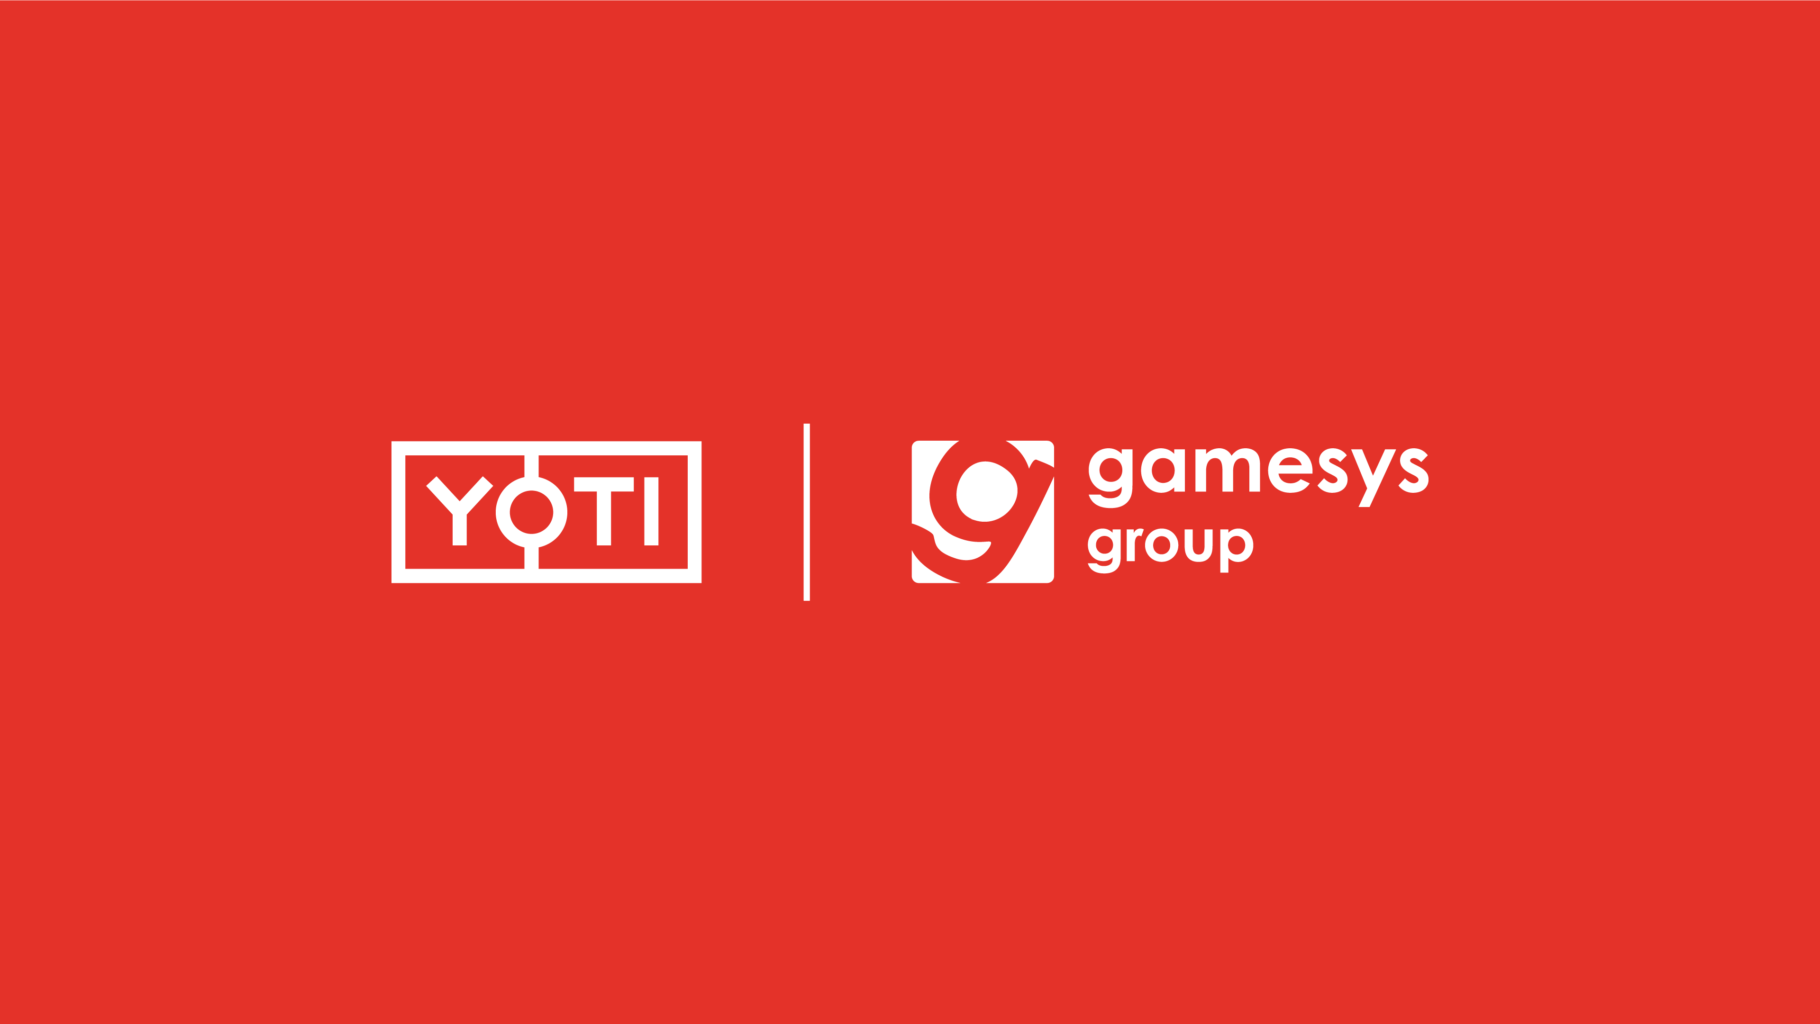 Yoti is speeding up KYC for Gamesys online casinos and bingo